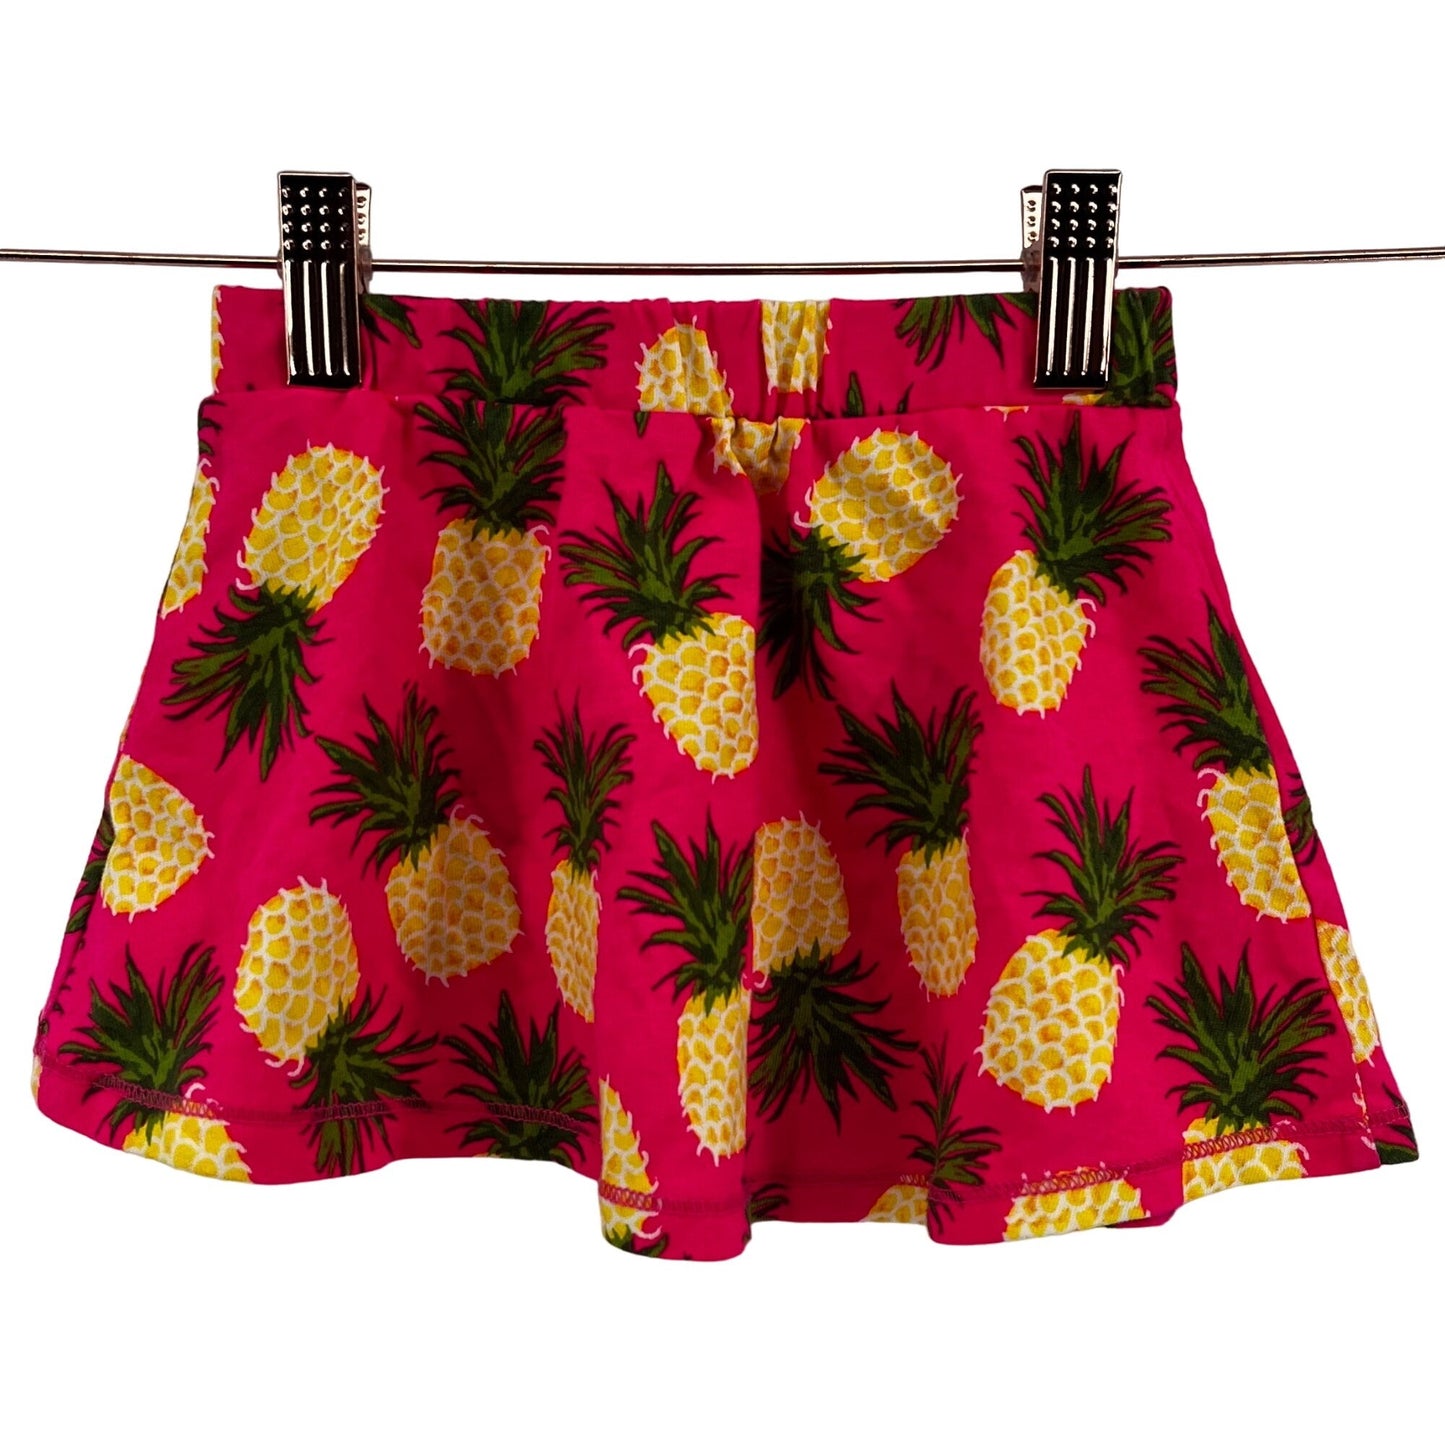 Koala Baby Girl's Size 9-12 Months Pink/Yellow/Green Pineapple Print Mini Skirt